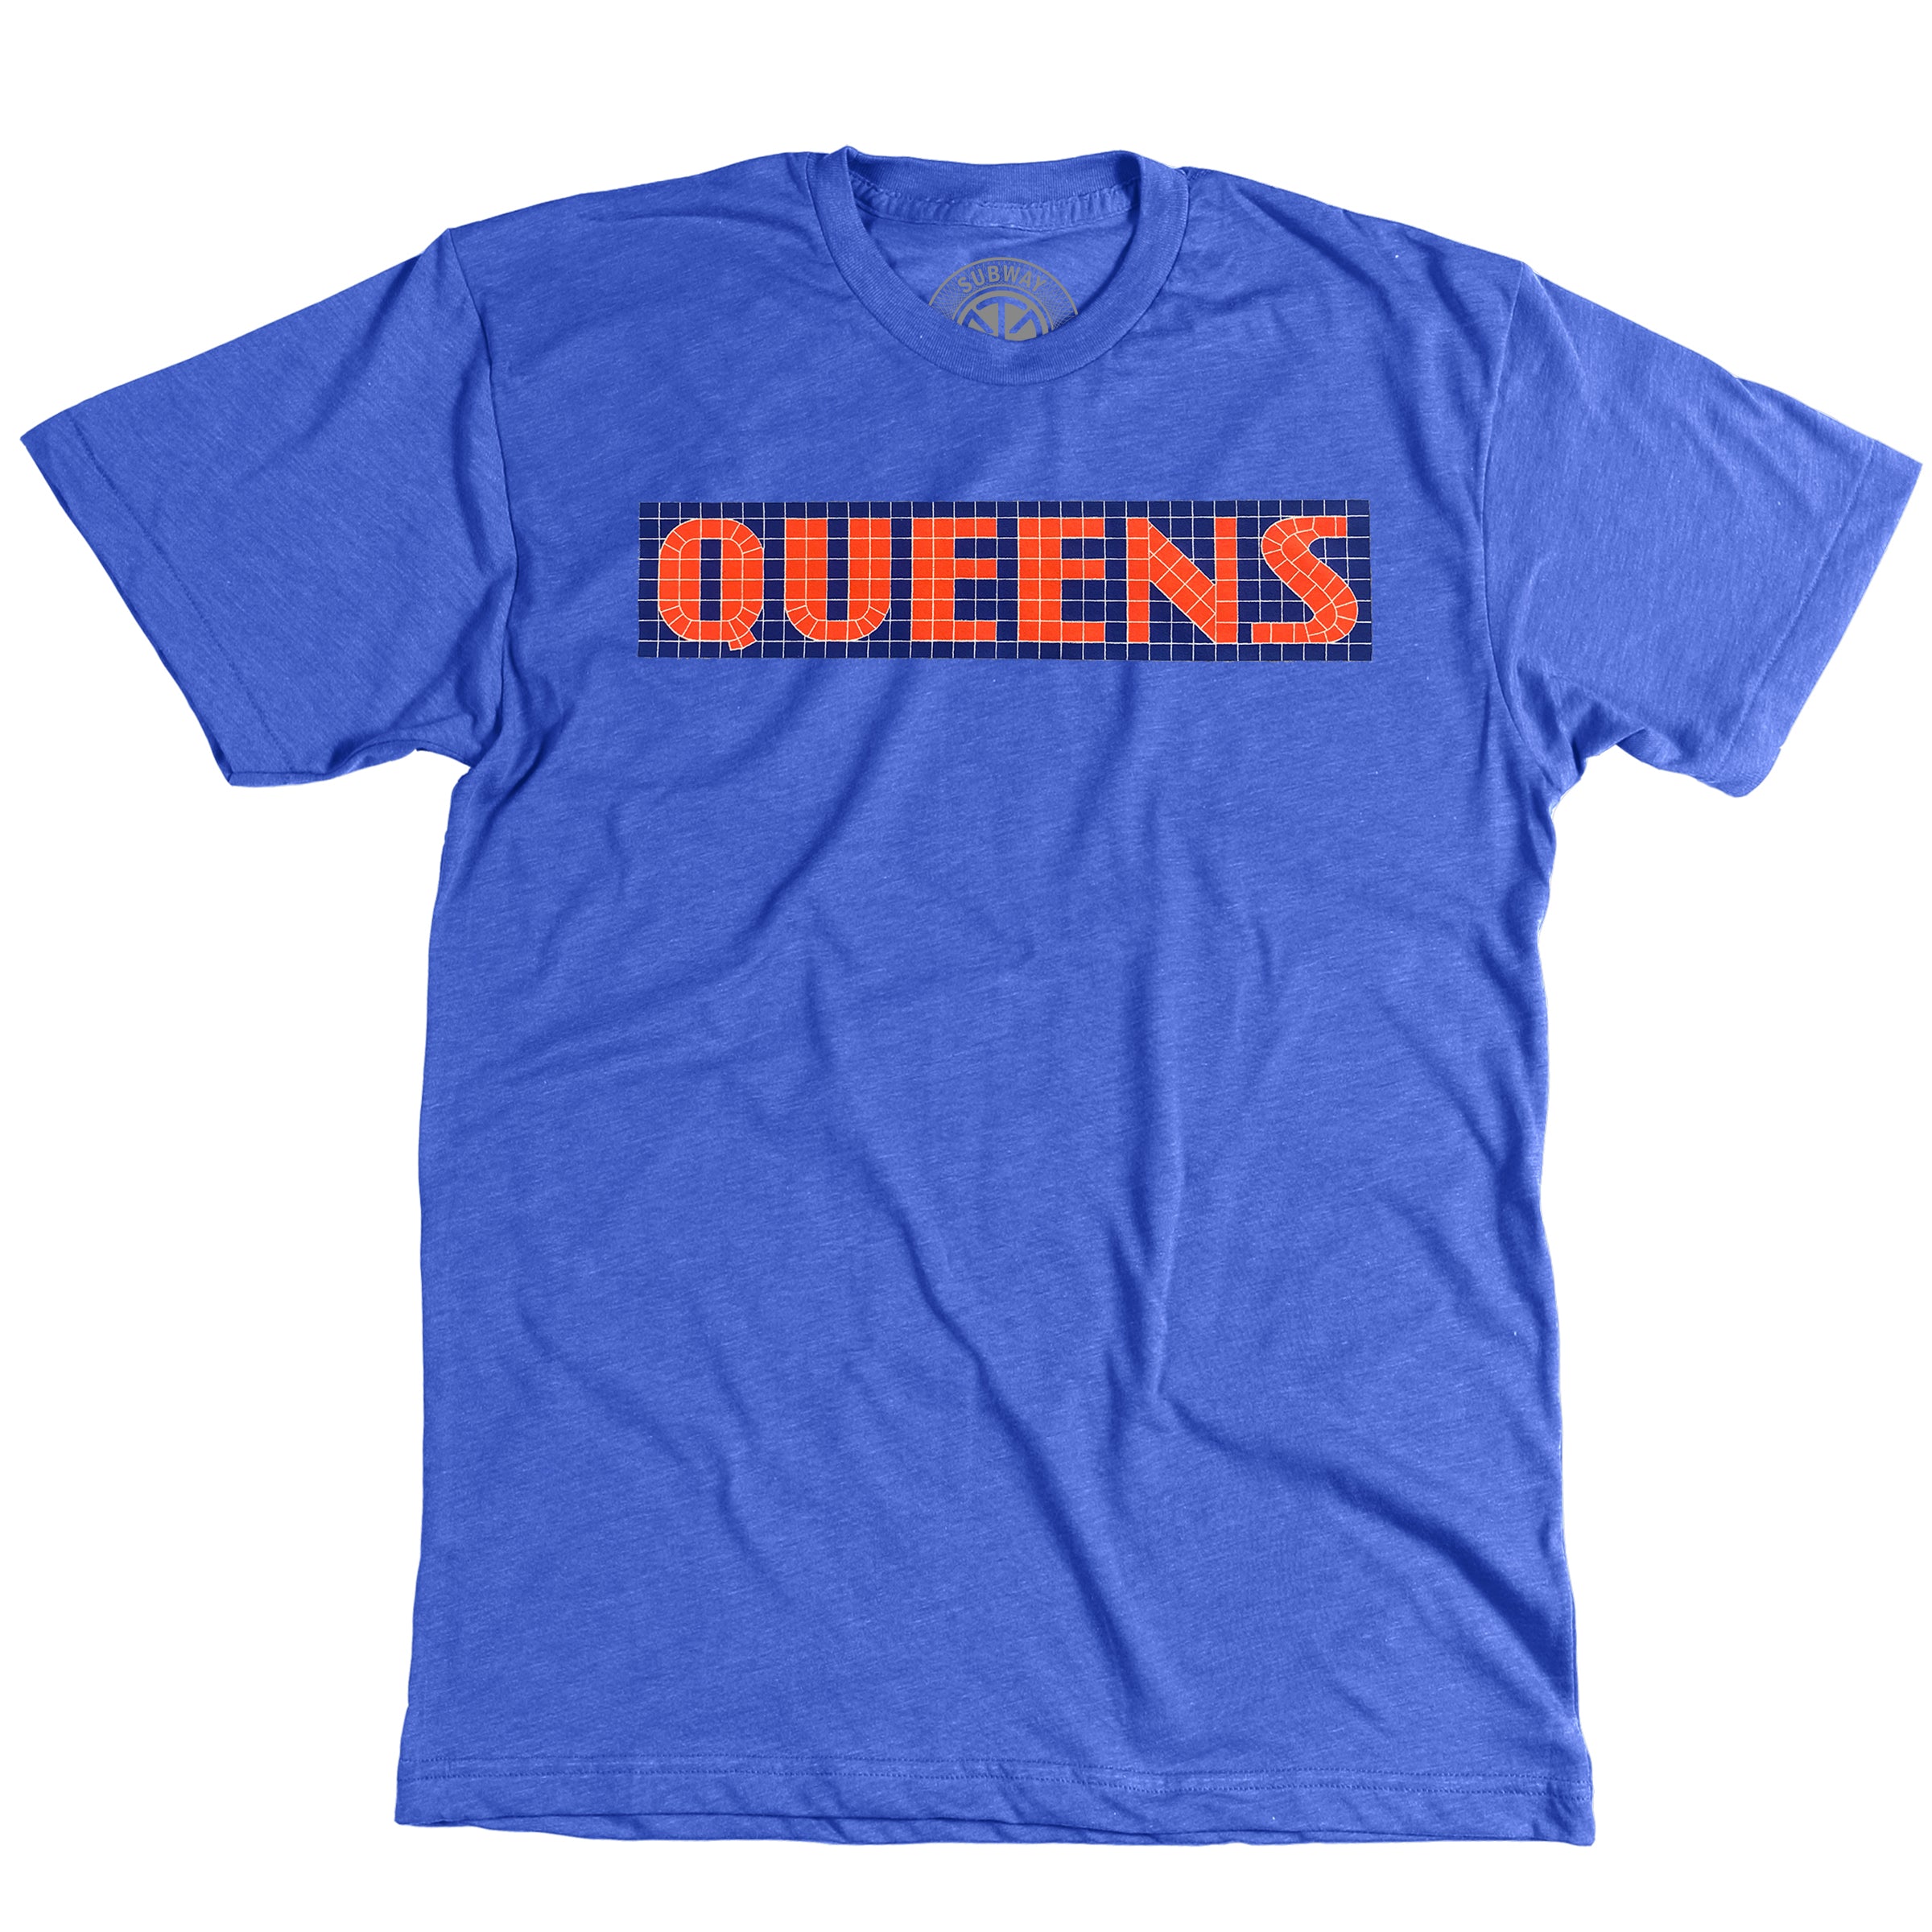 Subway Tile Shirts Queens Mets Shirt Blue / XSmall